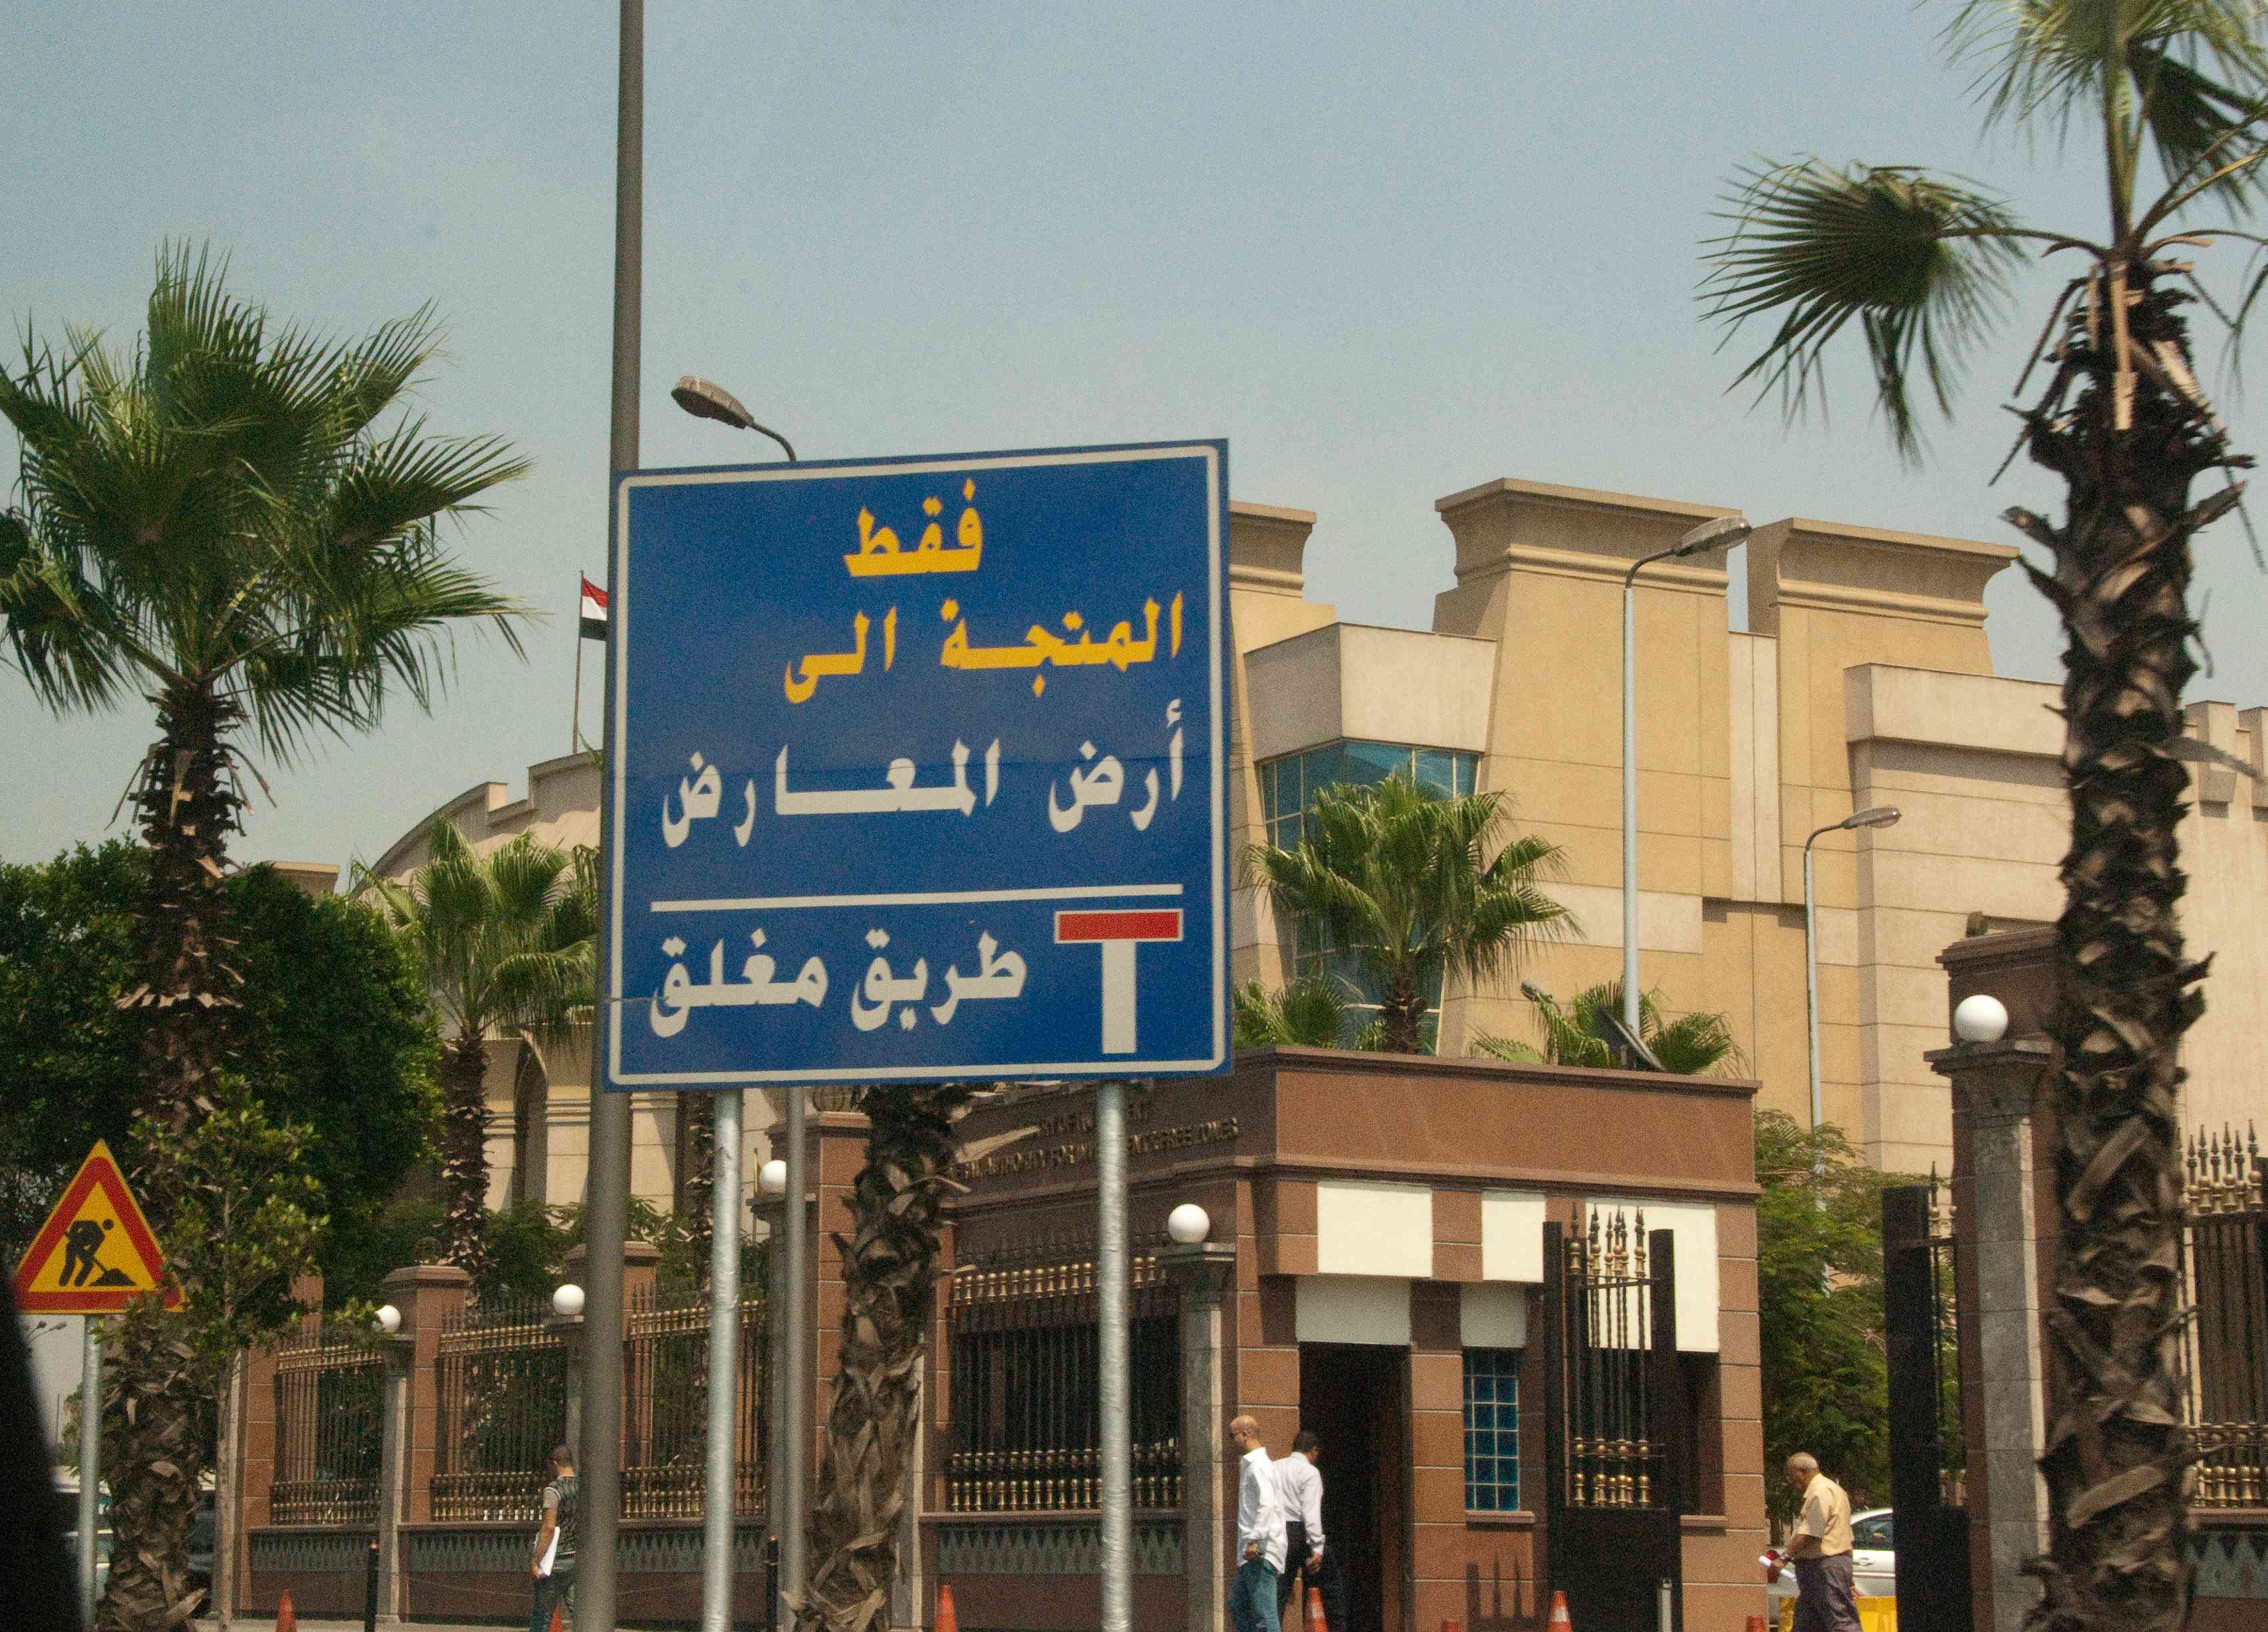 Kairó, útjelző tábla arabusul - aki nem tud arabusul, az busul